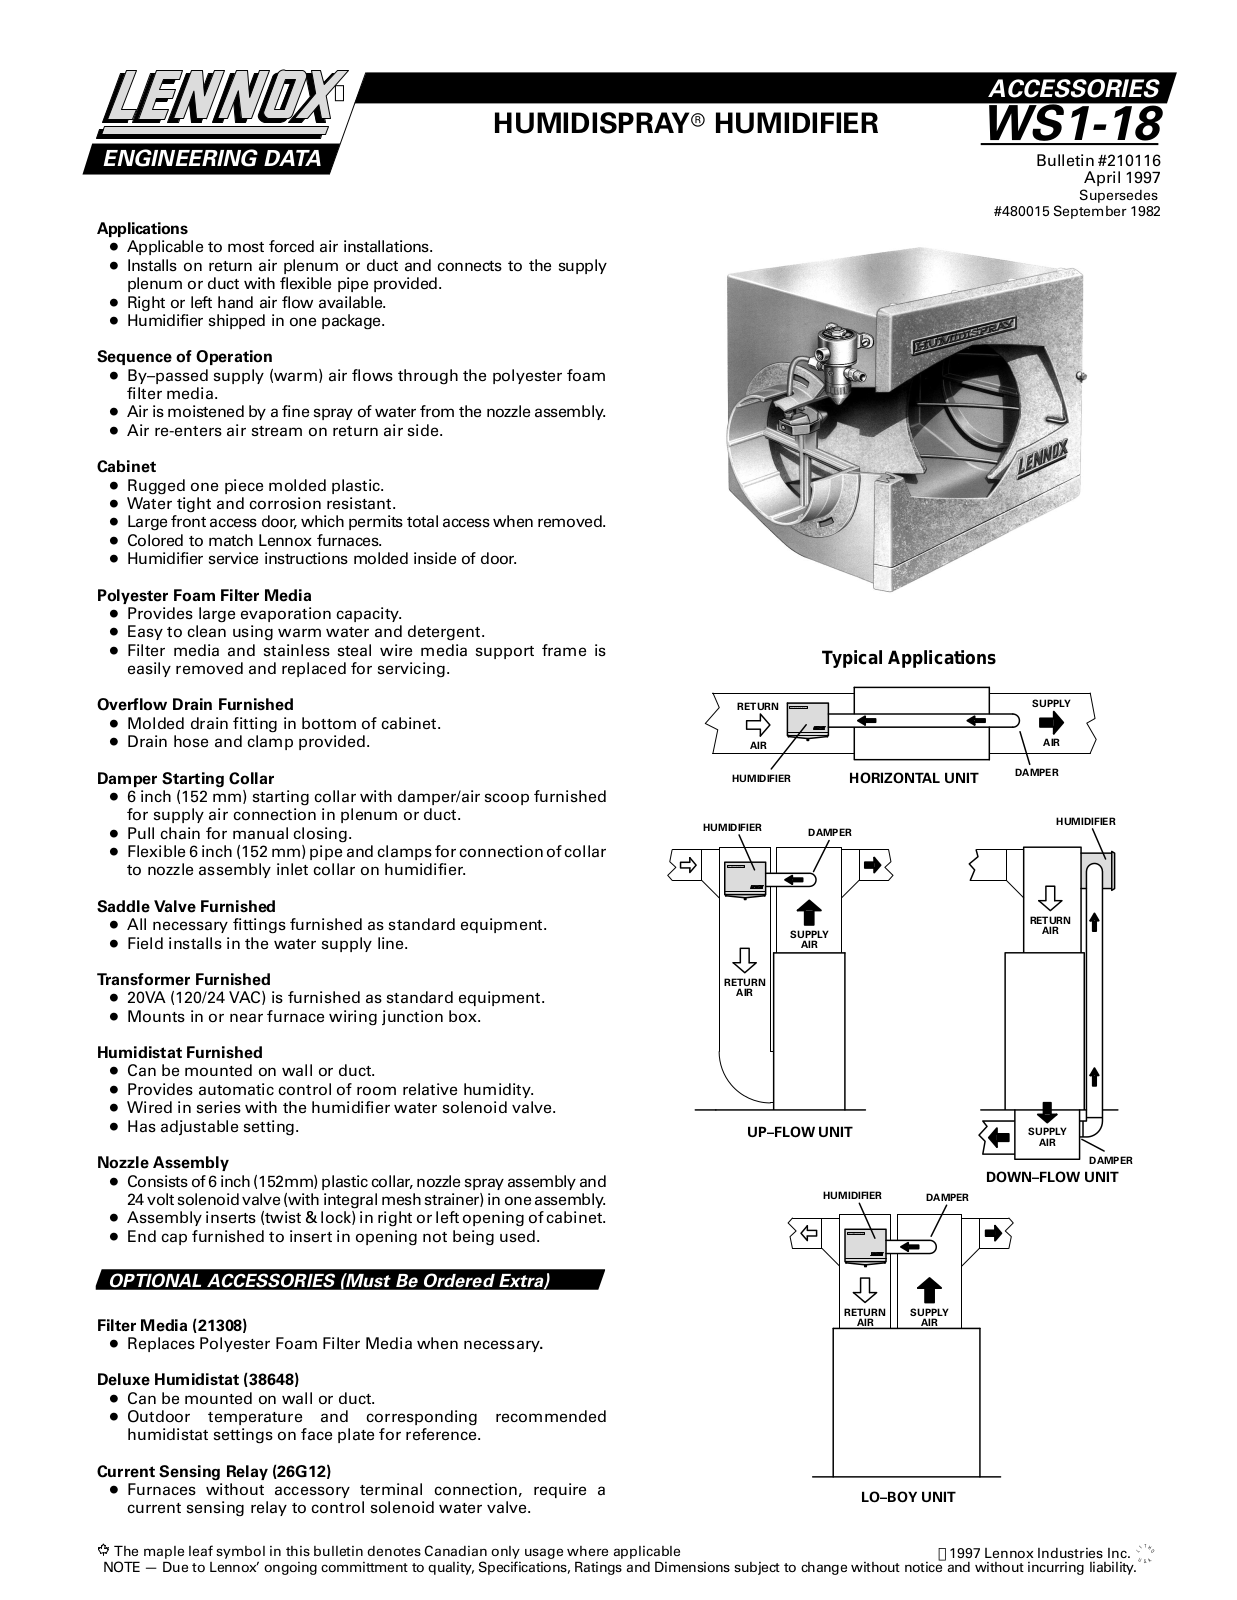 Lennox Ws1-18-2 Owner's Manual